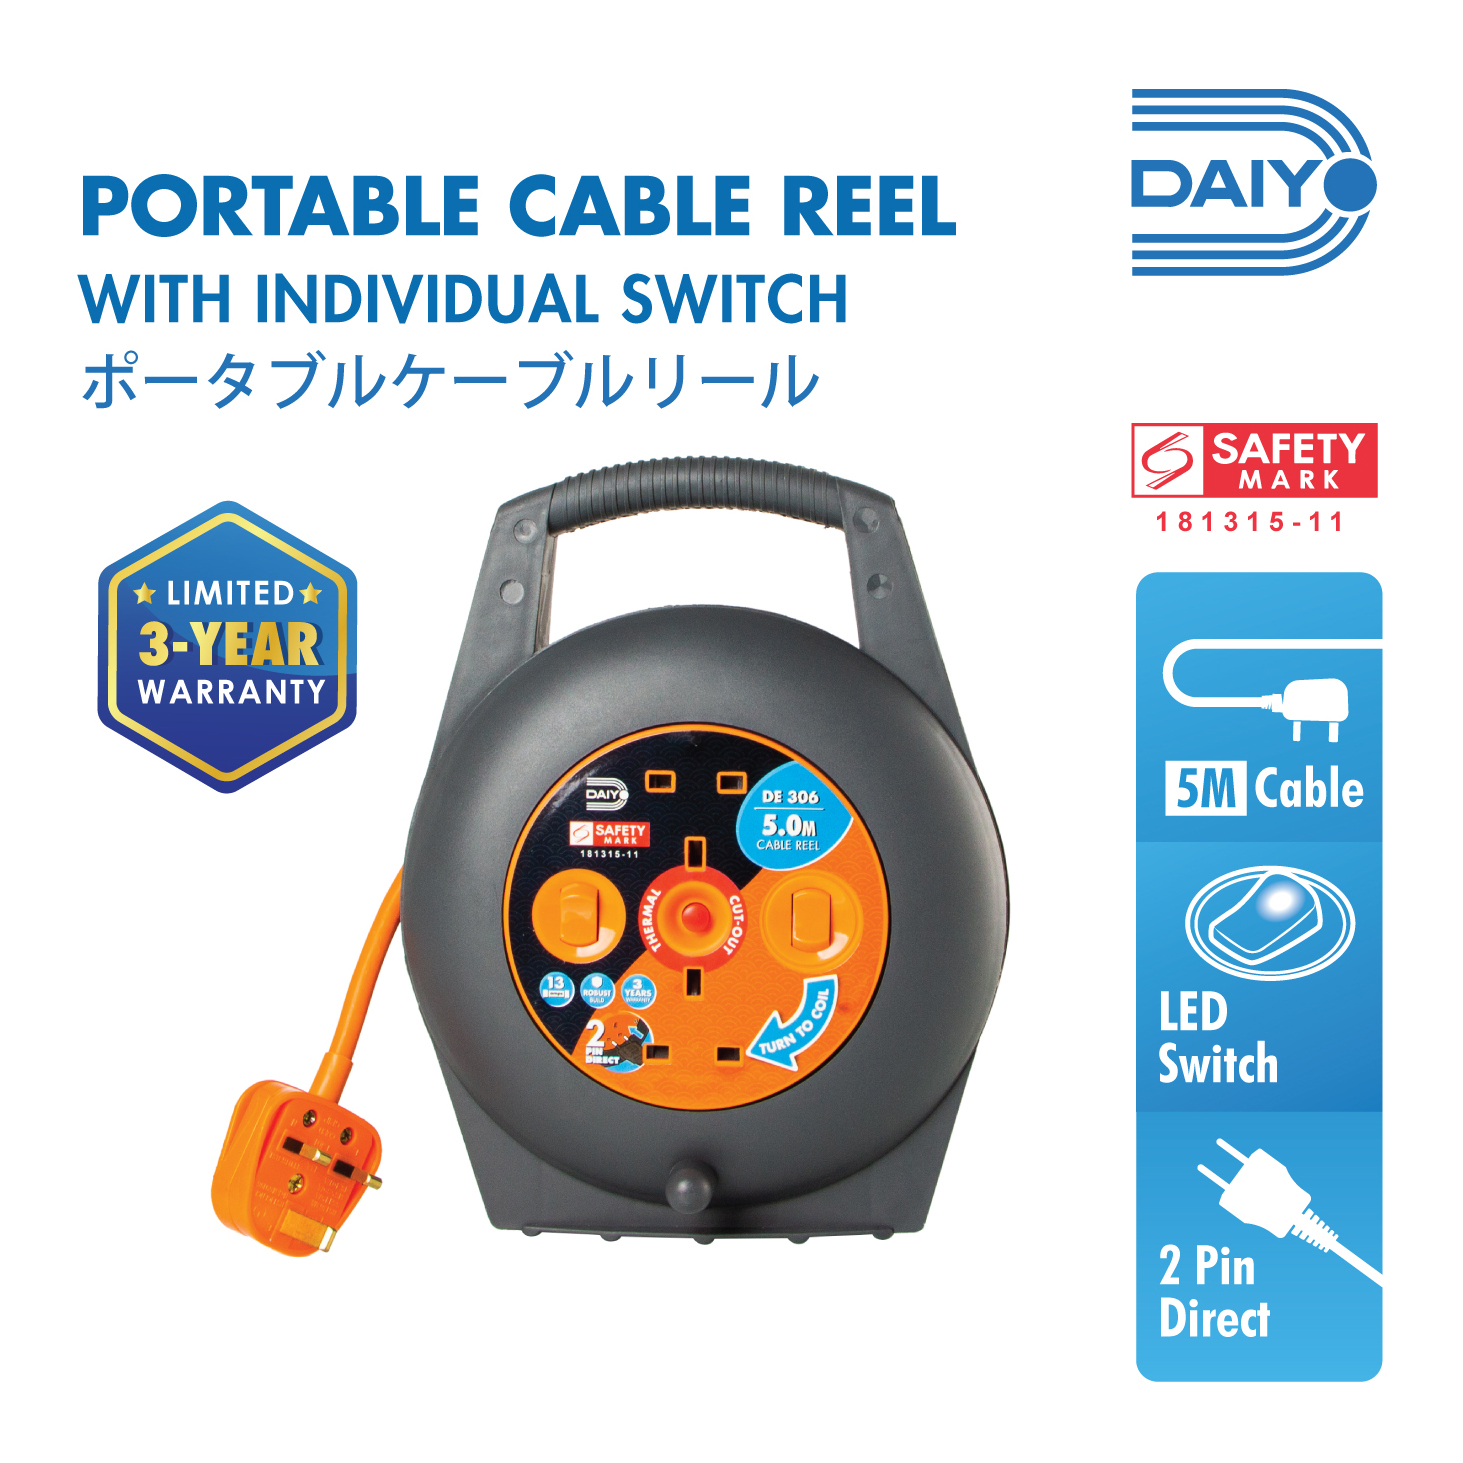 Daiyo DE 308 Portable Cable Reel/ Extension Cable Roll 10m